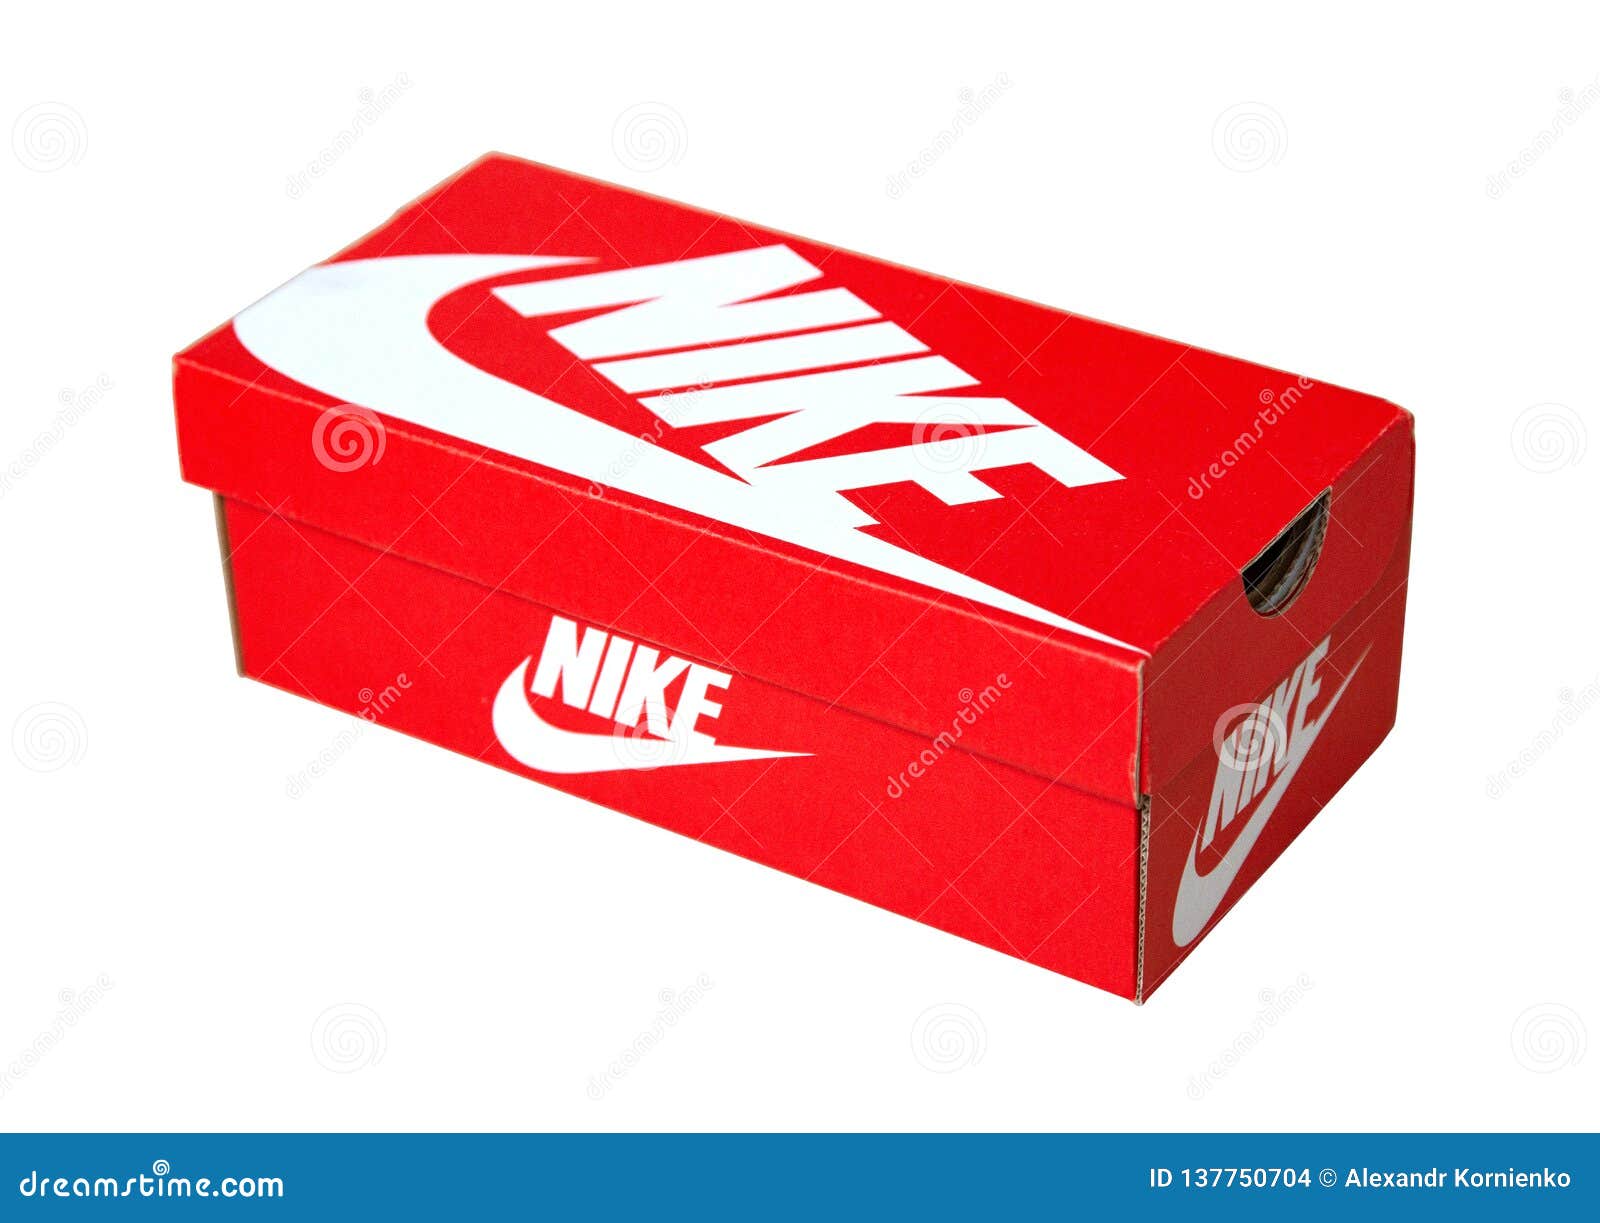 206 Nike Box Photos - Free \u0026 Royalty-Free Stock Photos from Dreamstime